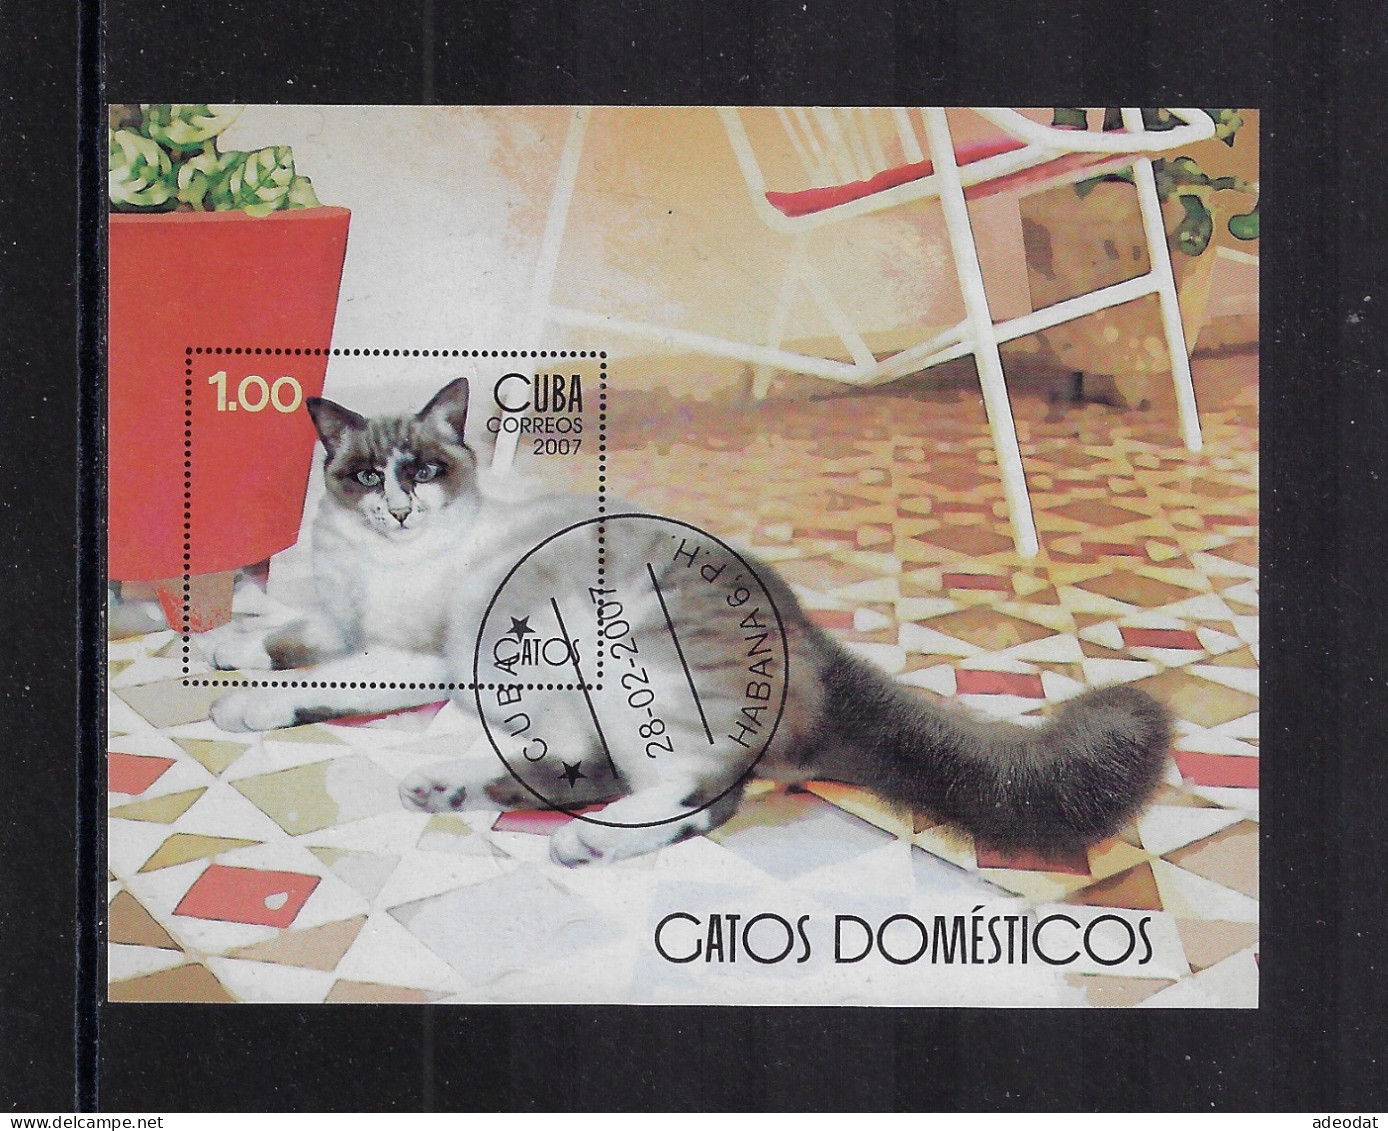 CUBA 2007 CATS SCOTT 4679 CANCELLED - Oblitérés